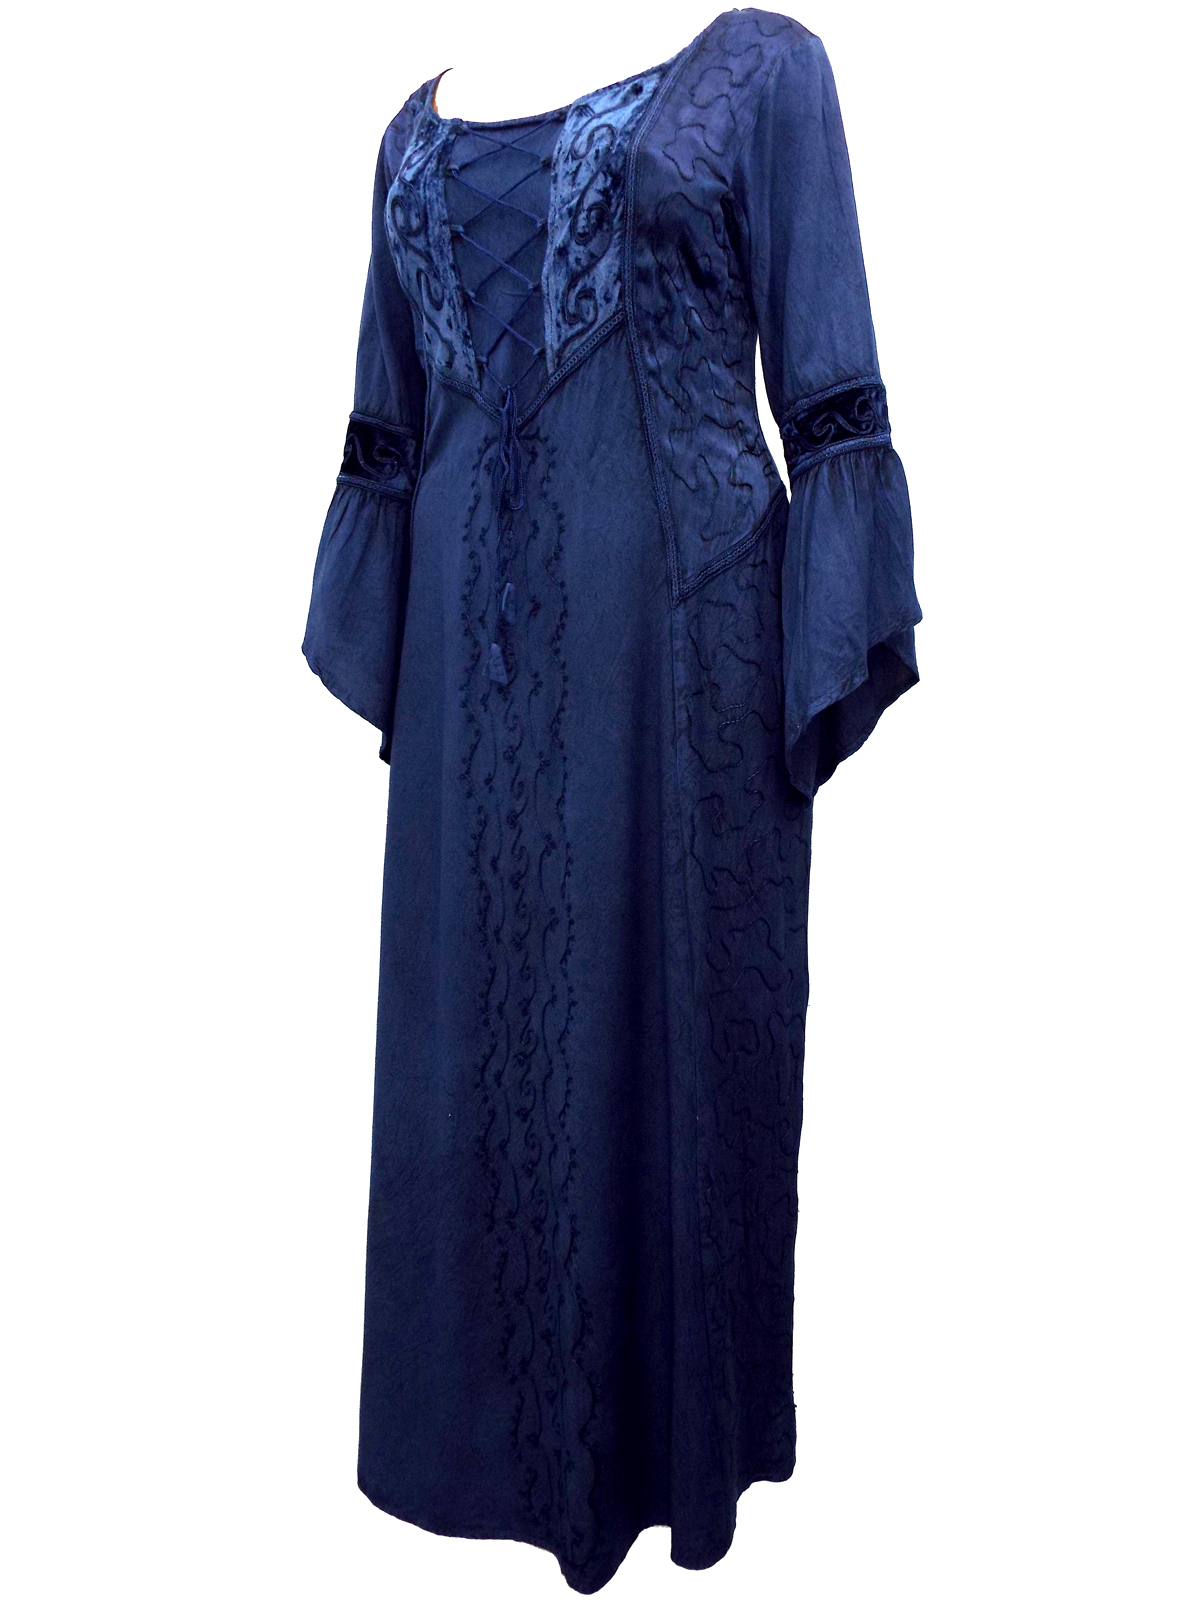 Eaonplus NAVY Dark Seduction Rayon Velvet Lace-Up Corset Dress Gown ...